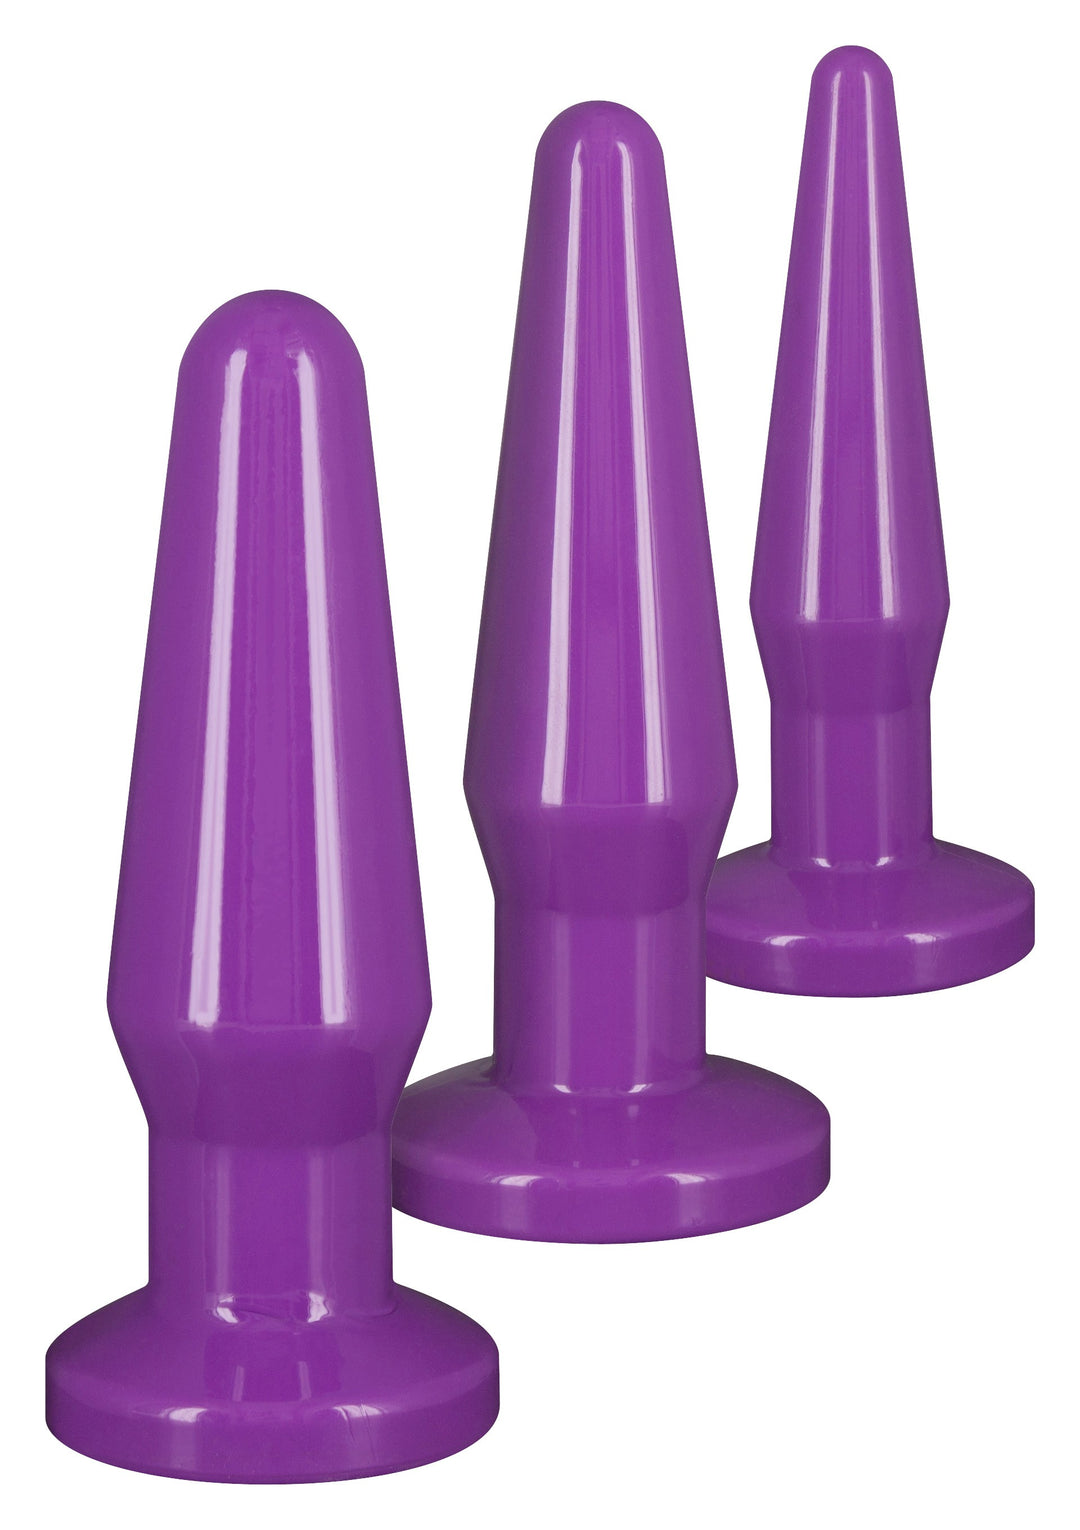 Kit fallo anale 3 pz dildo anal butt plug set sex toys anal mini maxi purple